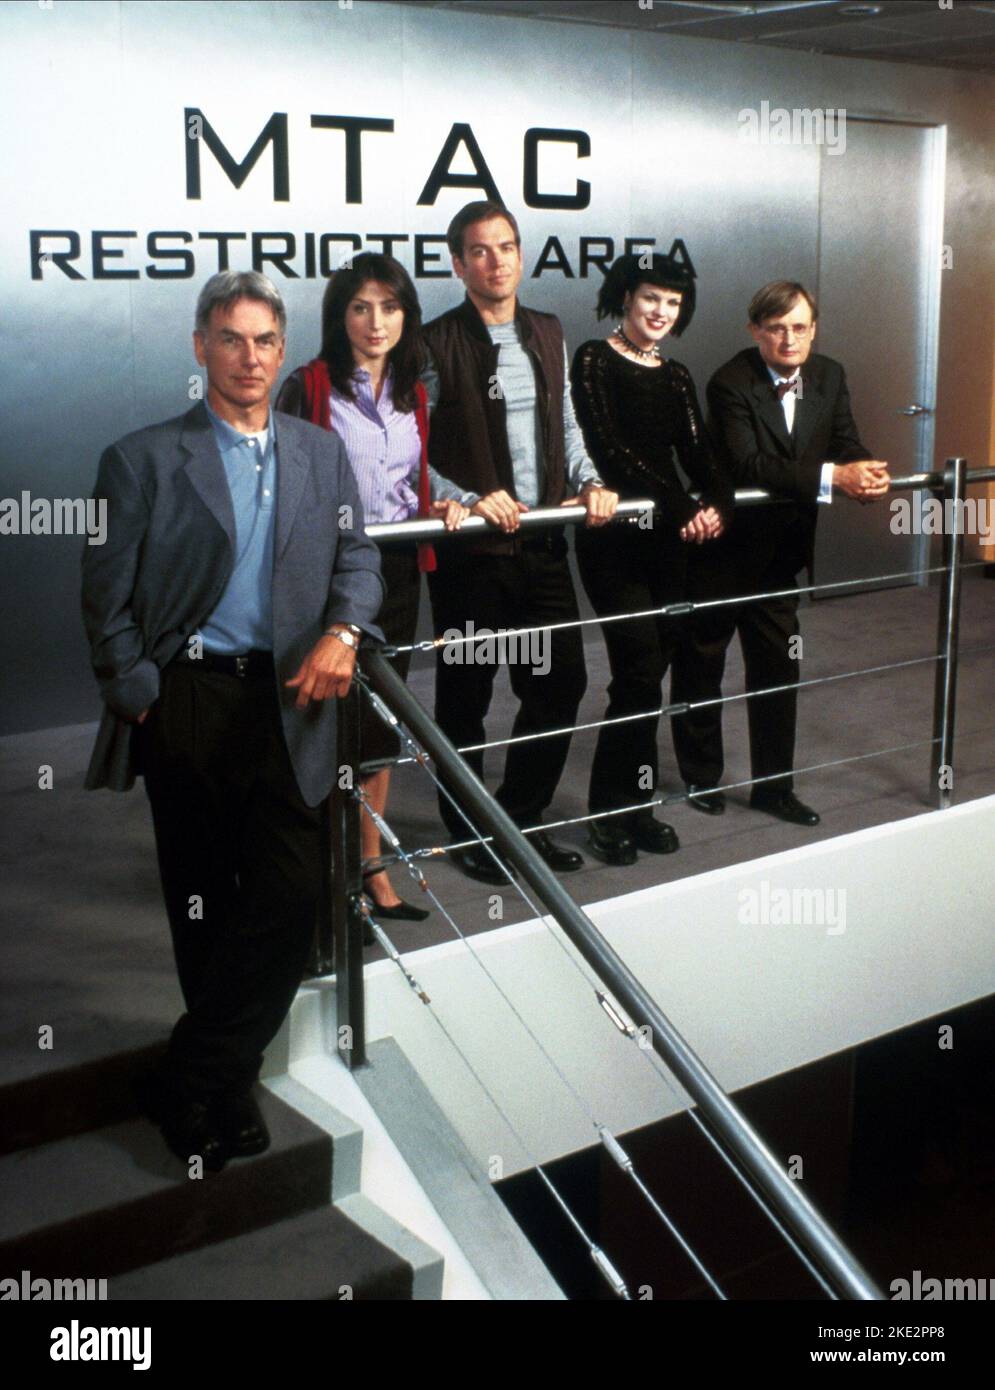 NCIS, MARK HARMON, SASHA ALEXANDER, MICHAEL WEATHERLY, PAULEY PERRETTE, DAVID MCCALLUM, 2003 Stock Photo